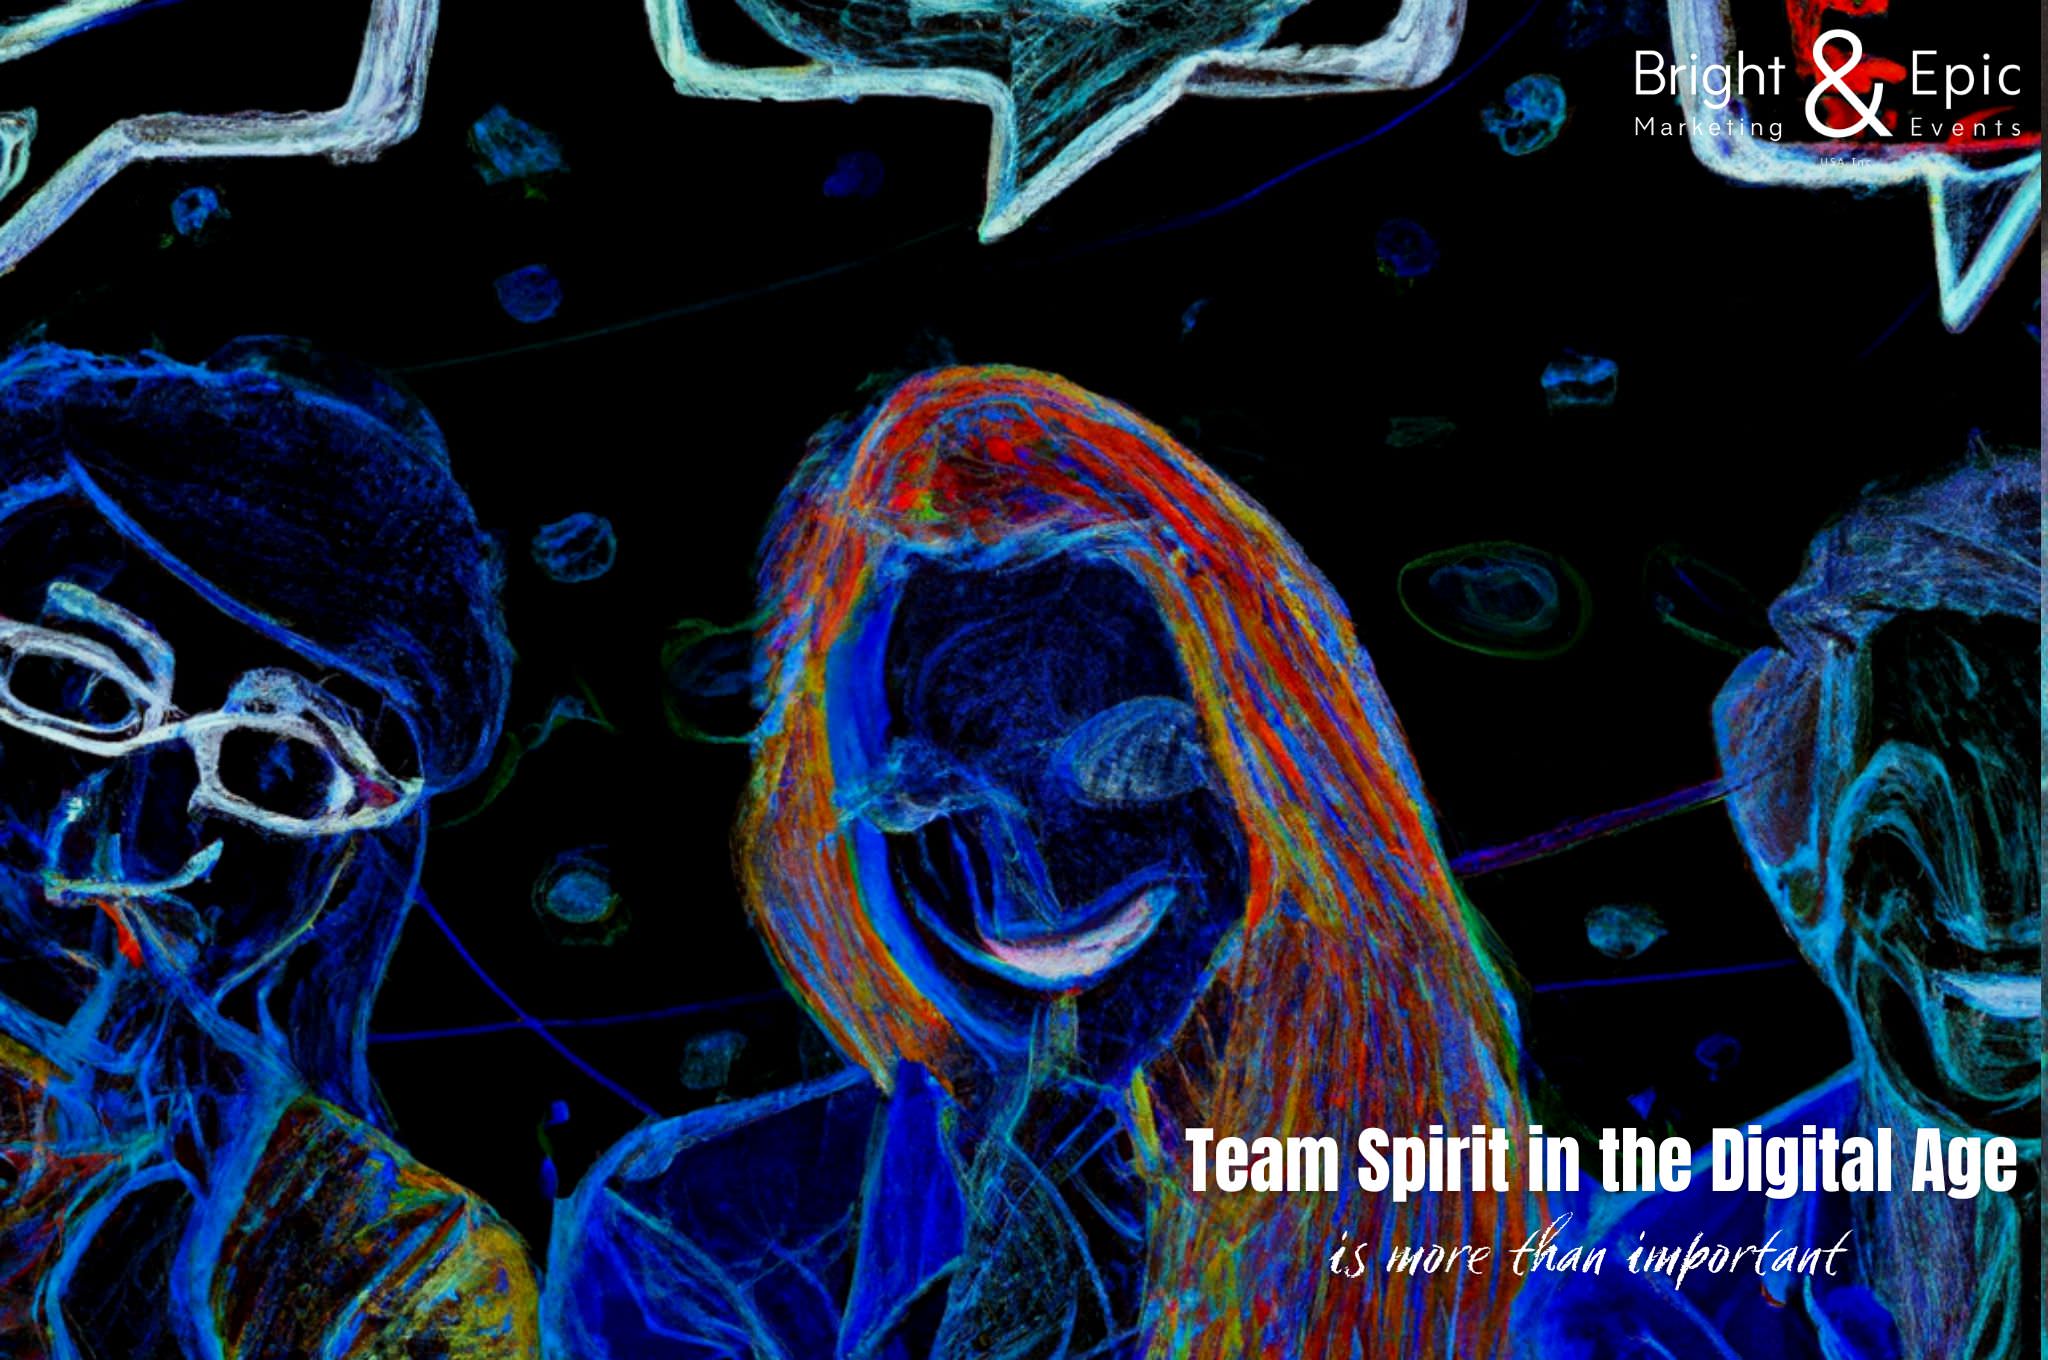 Team Spirit in the digital age - effective Virtual Team Building Activities can help teams bond